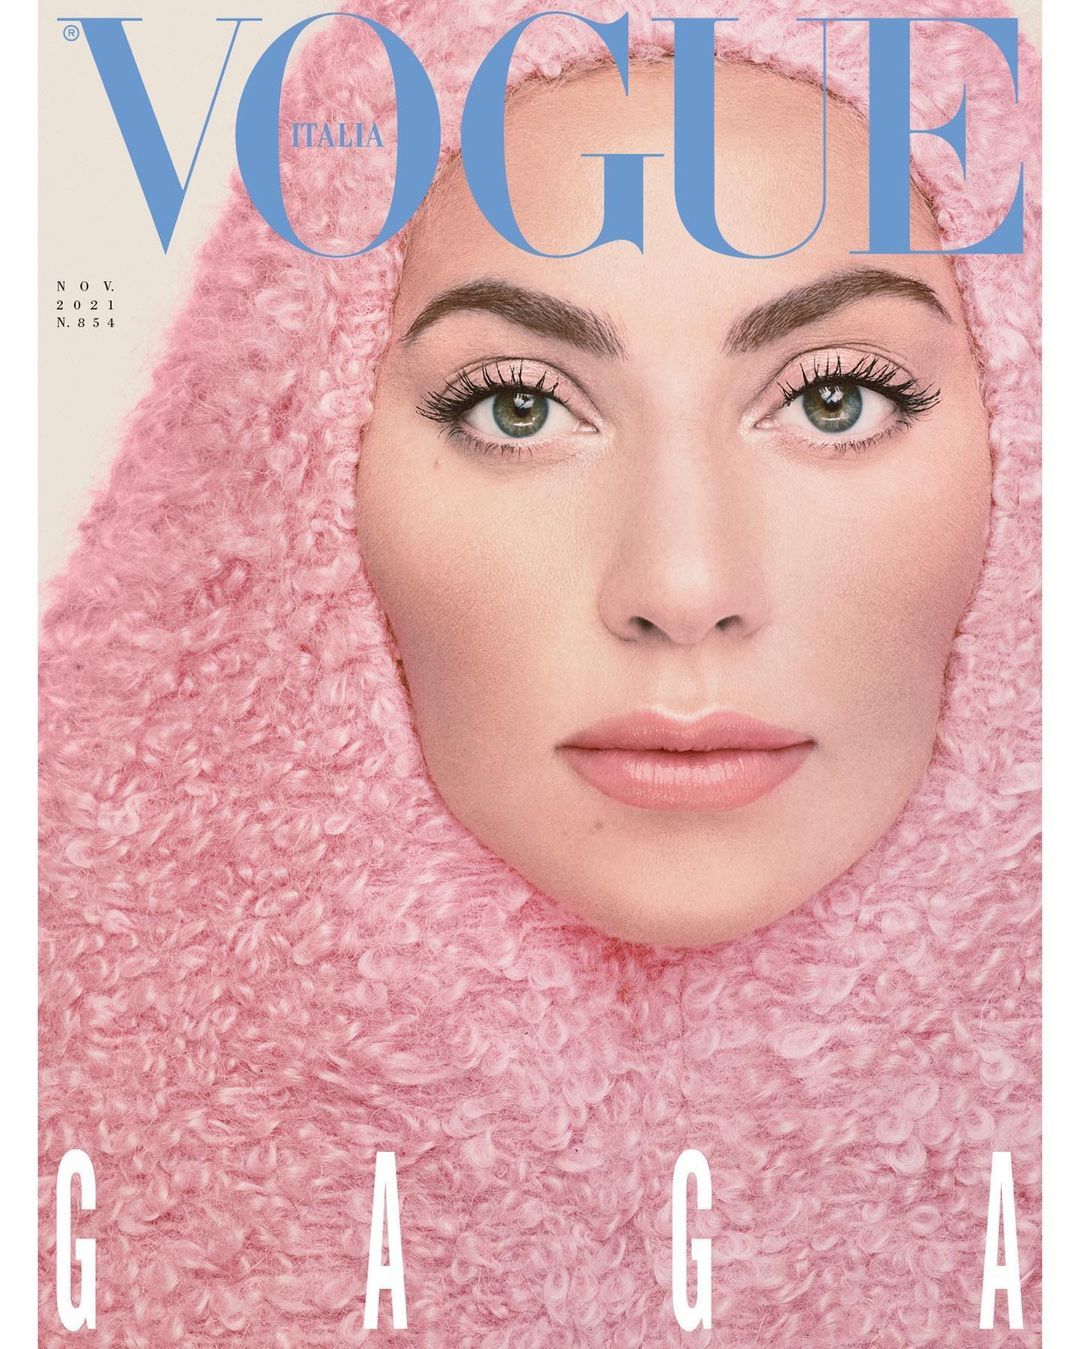 Lady Gaga di cover Vogue Italia